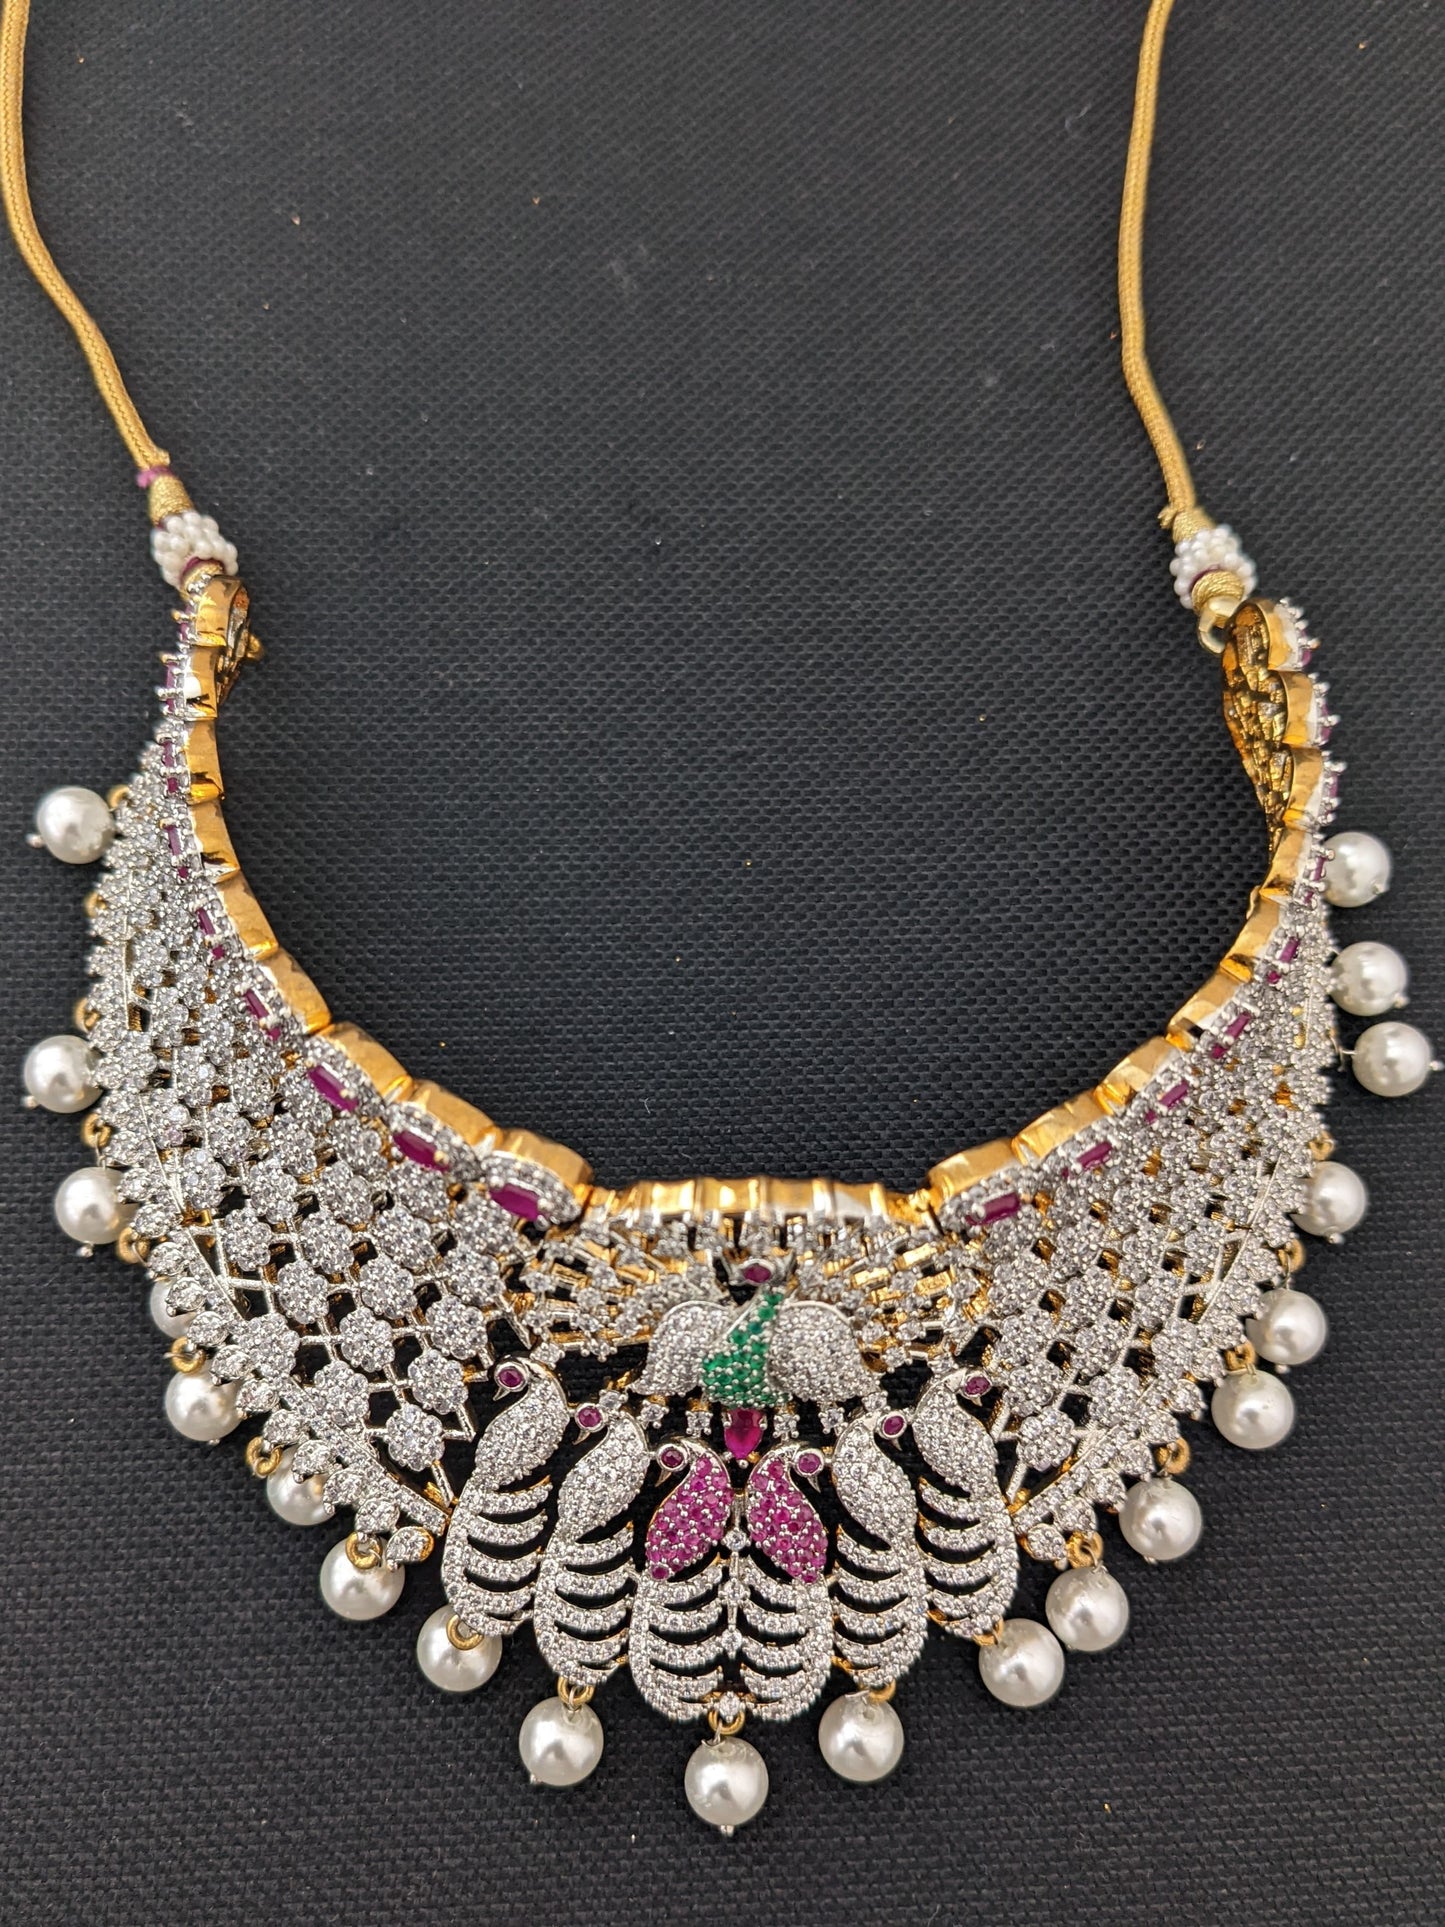 Peacock design Statement CZ choker necklace earrings set